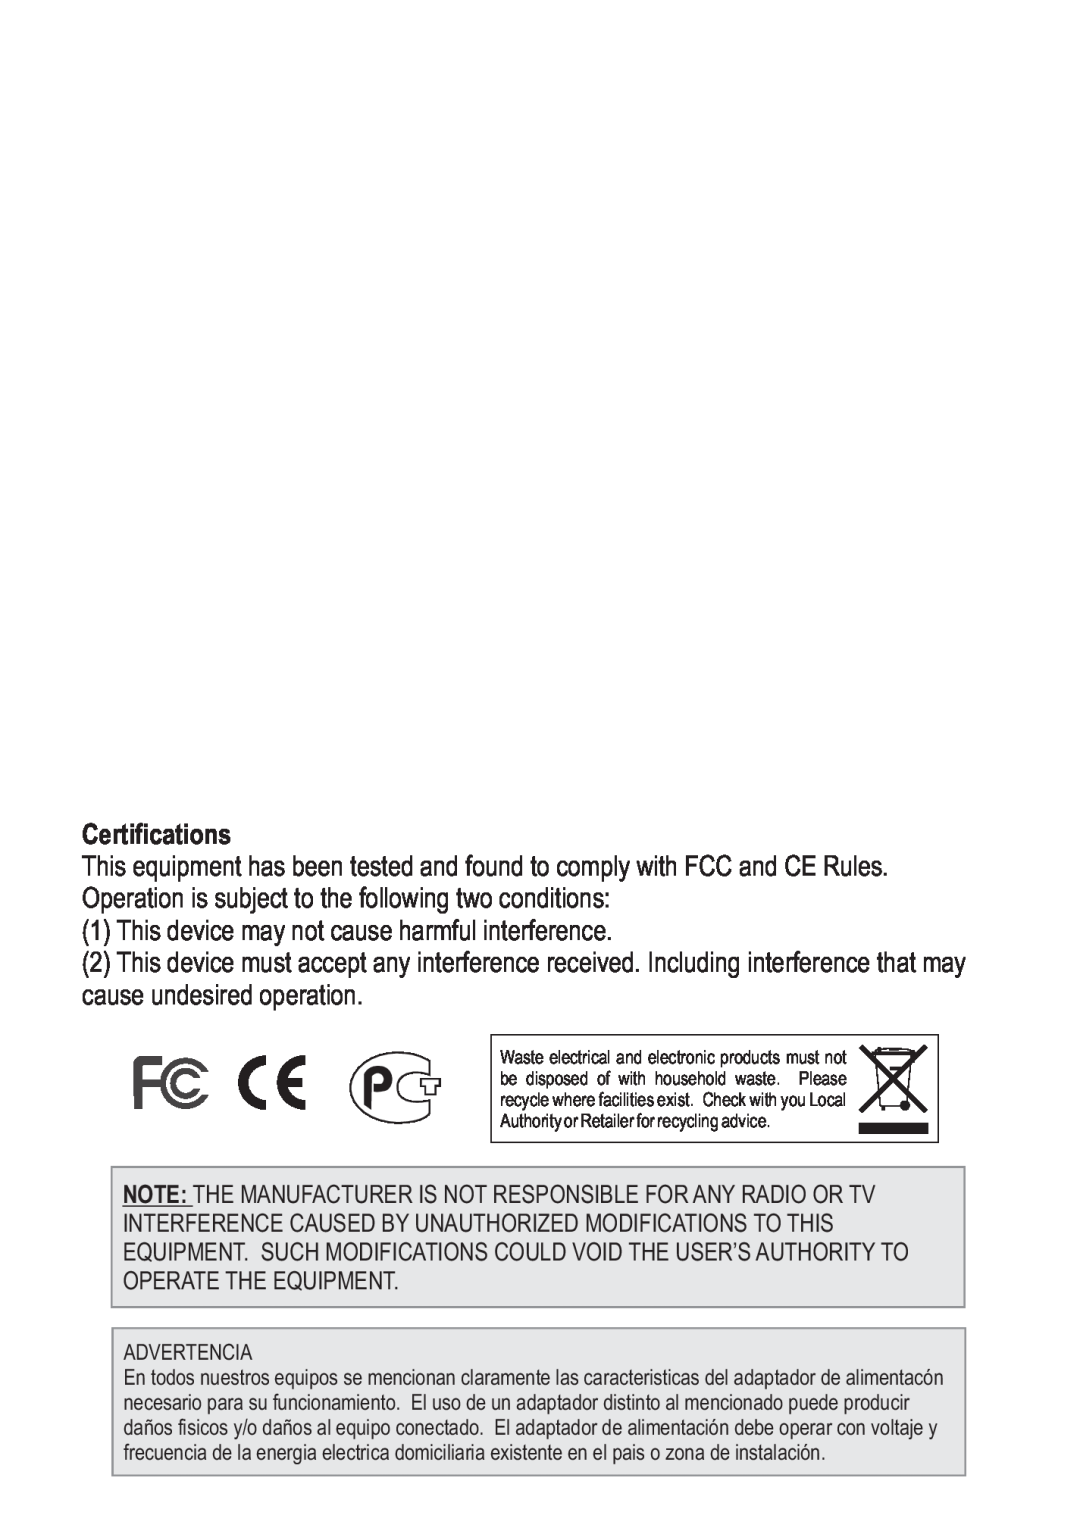 TRENDnet TK801R manual Certifications 